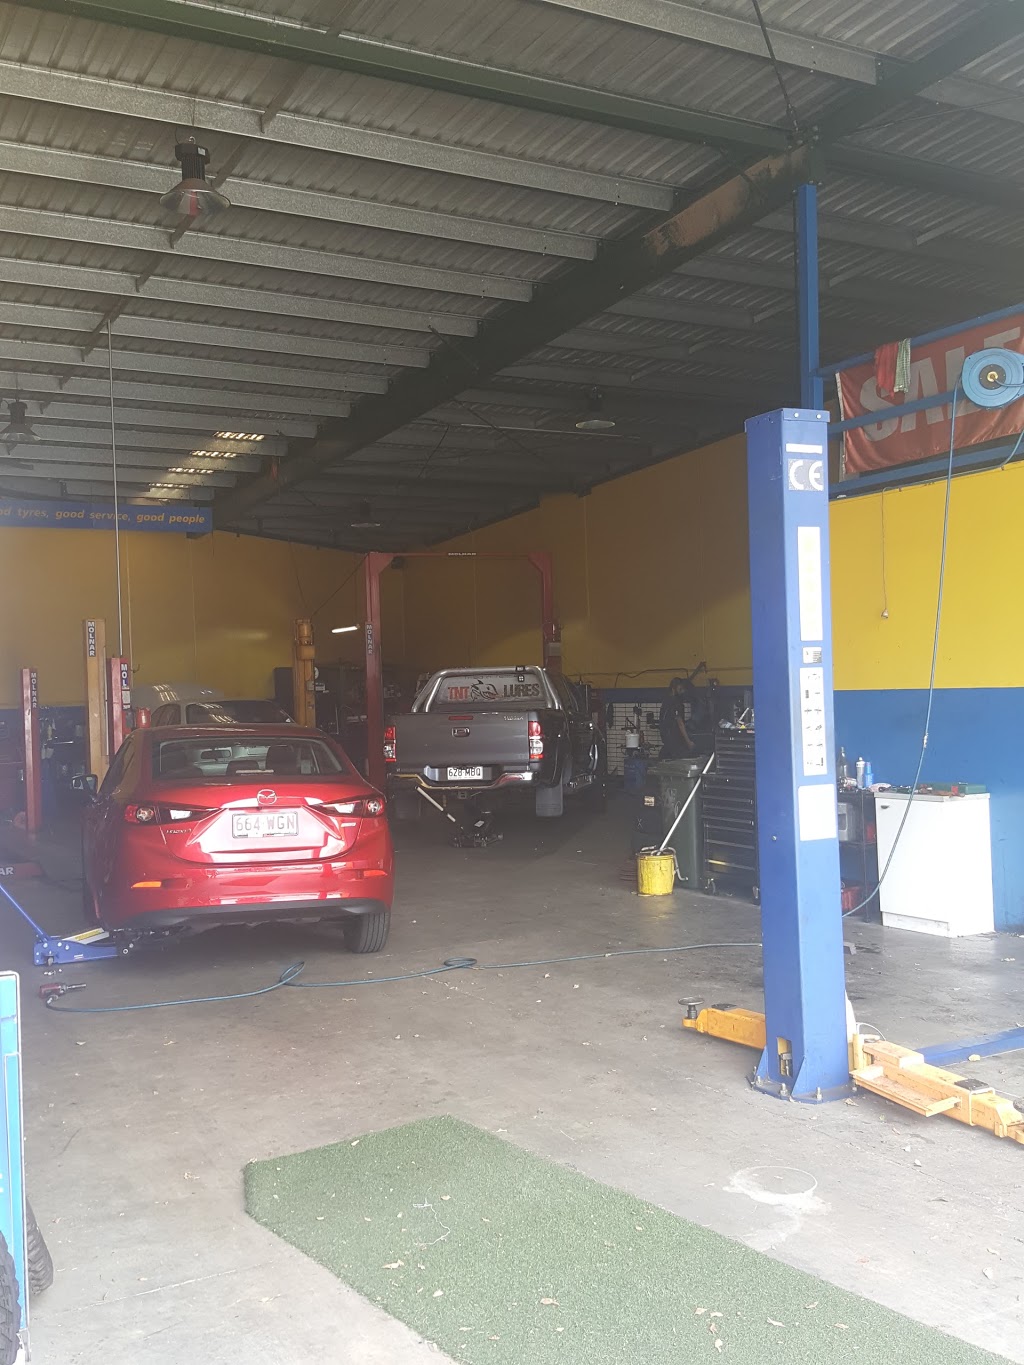 Goodyear Autocare Northgate | car repair | Unit 1/9 Northlink Pl, Virginia QLD 4013, Australia | 0732605488 OR +61 7 3260 5488